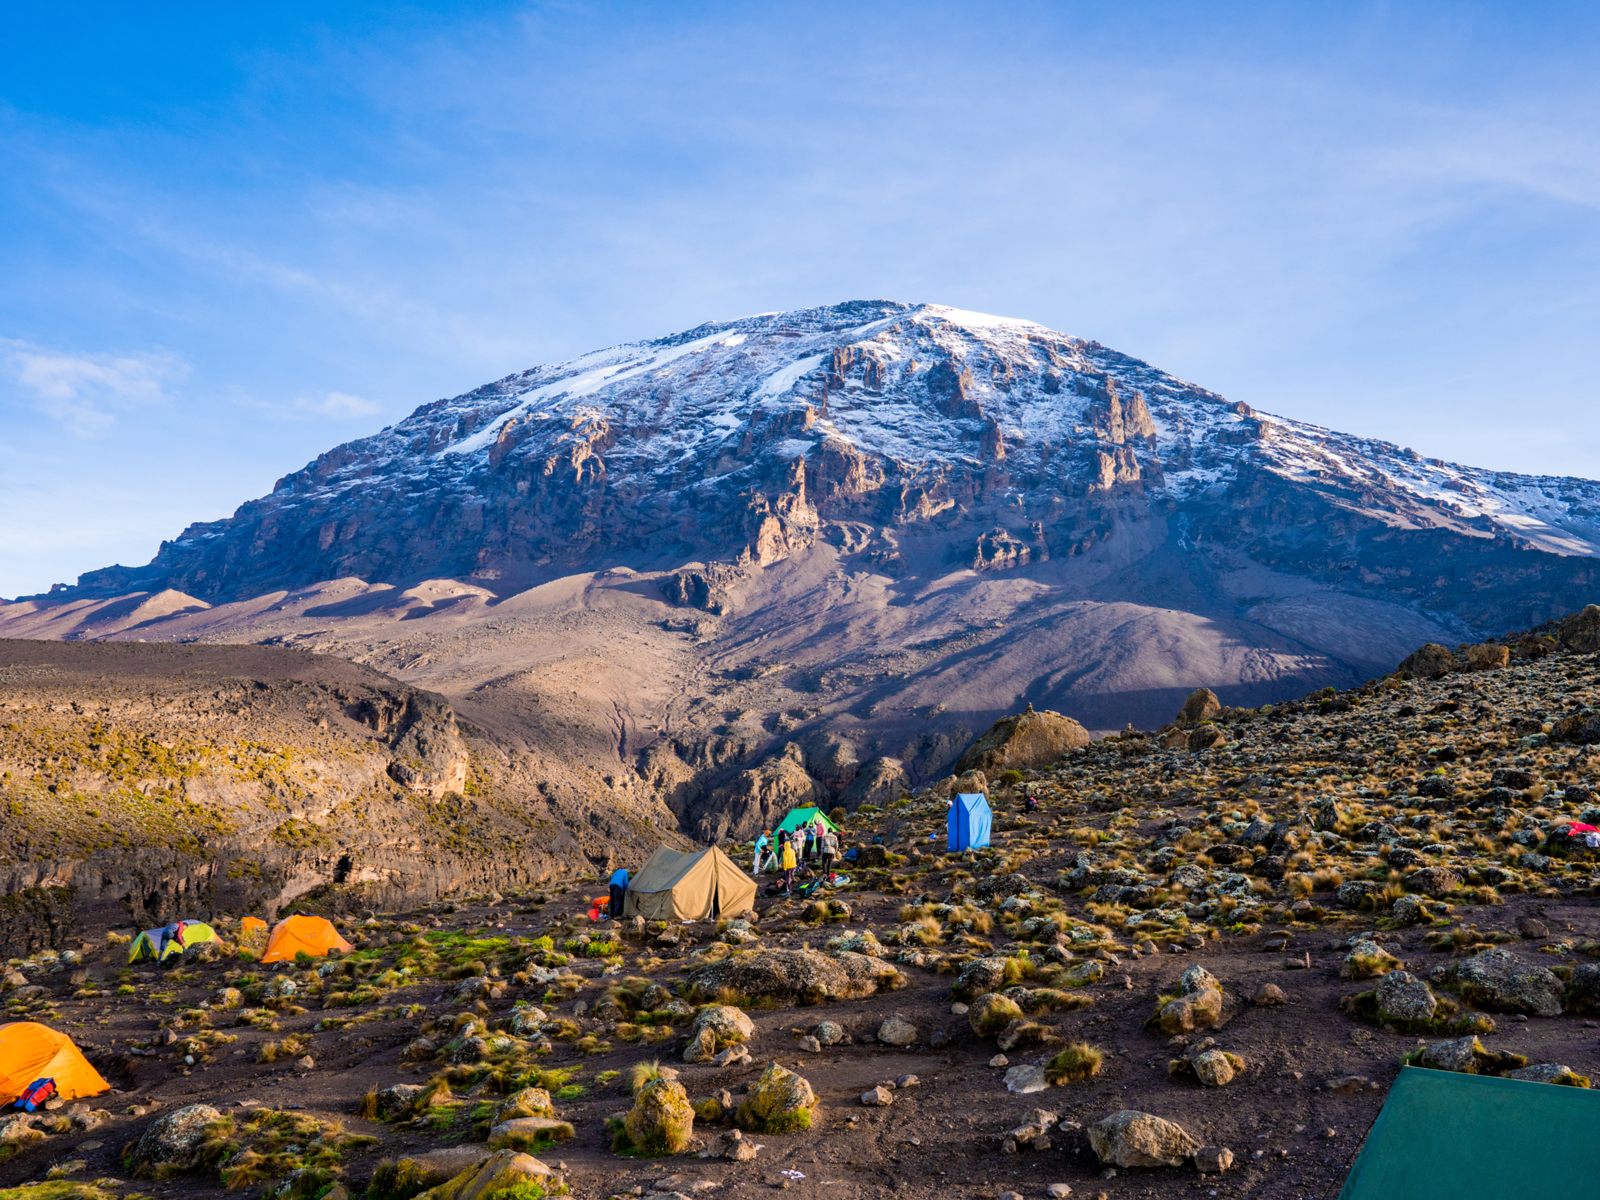 Lemosho Traverse on Mount Kilimanjaro, one of the best hikes in the world